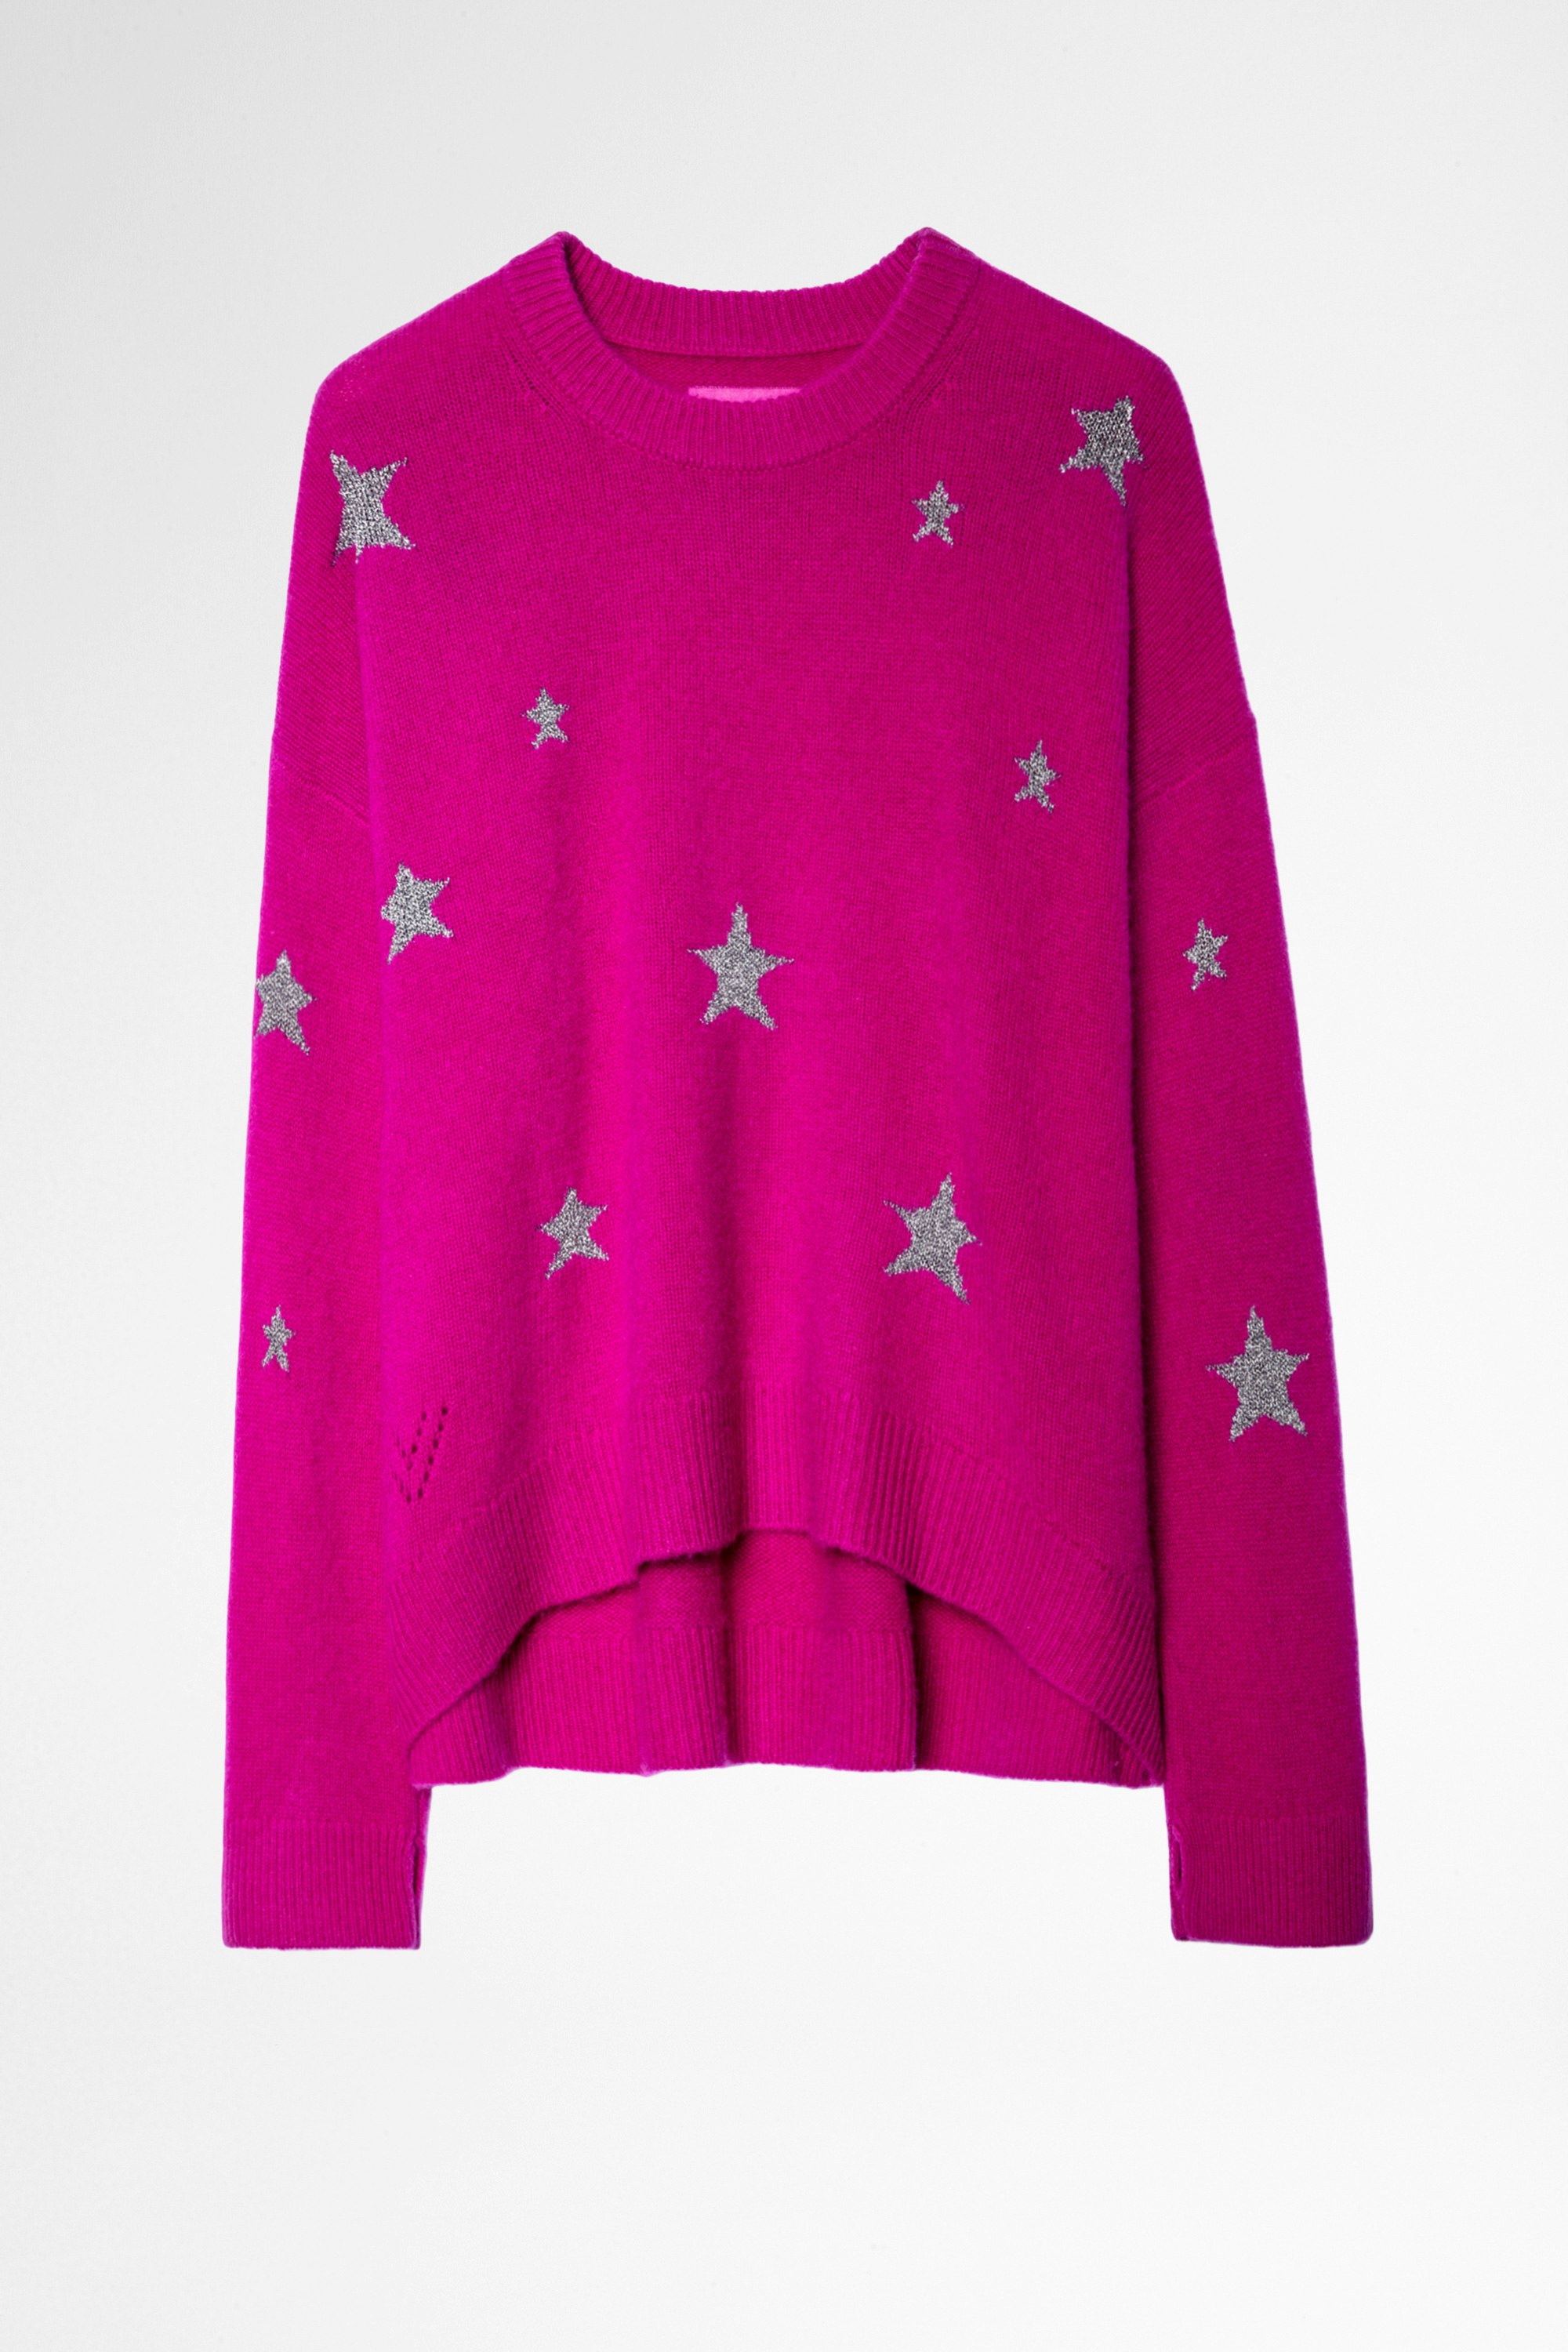 Markus Stars Sweater Cashmere Women's cashmere jumper in beige with star print